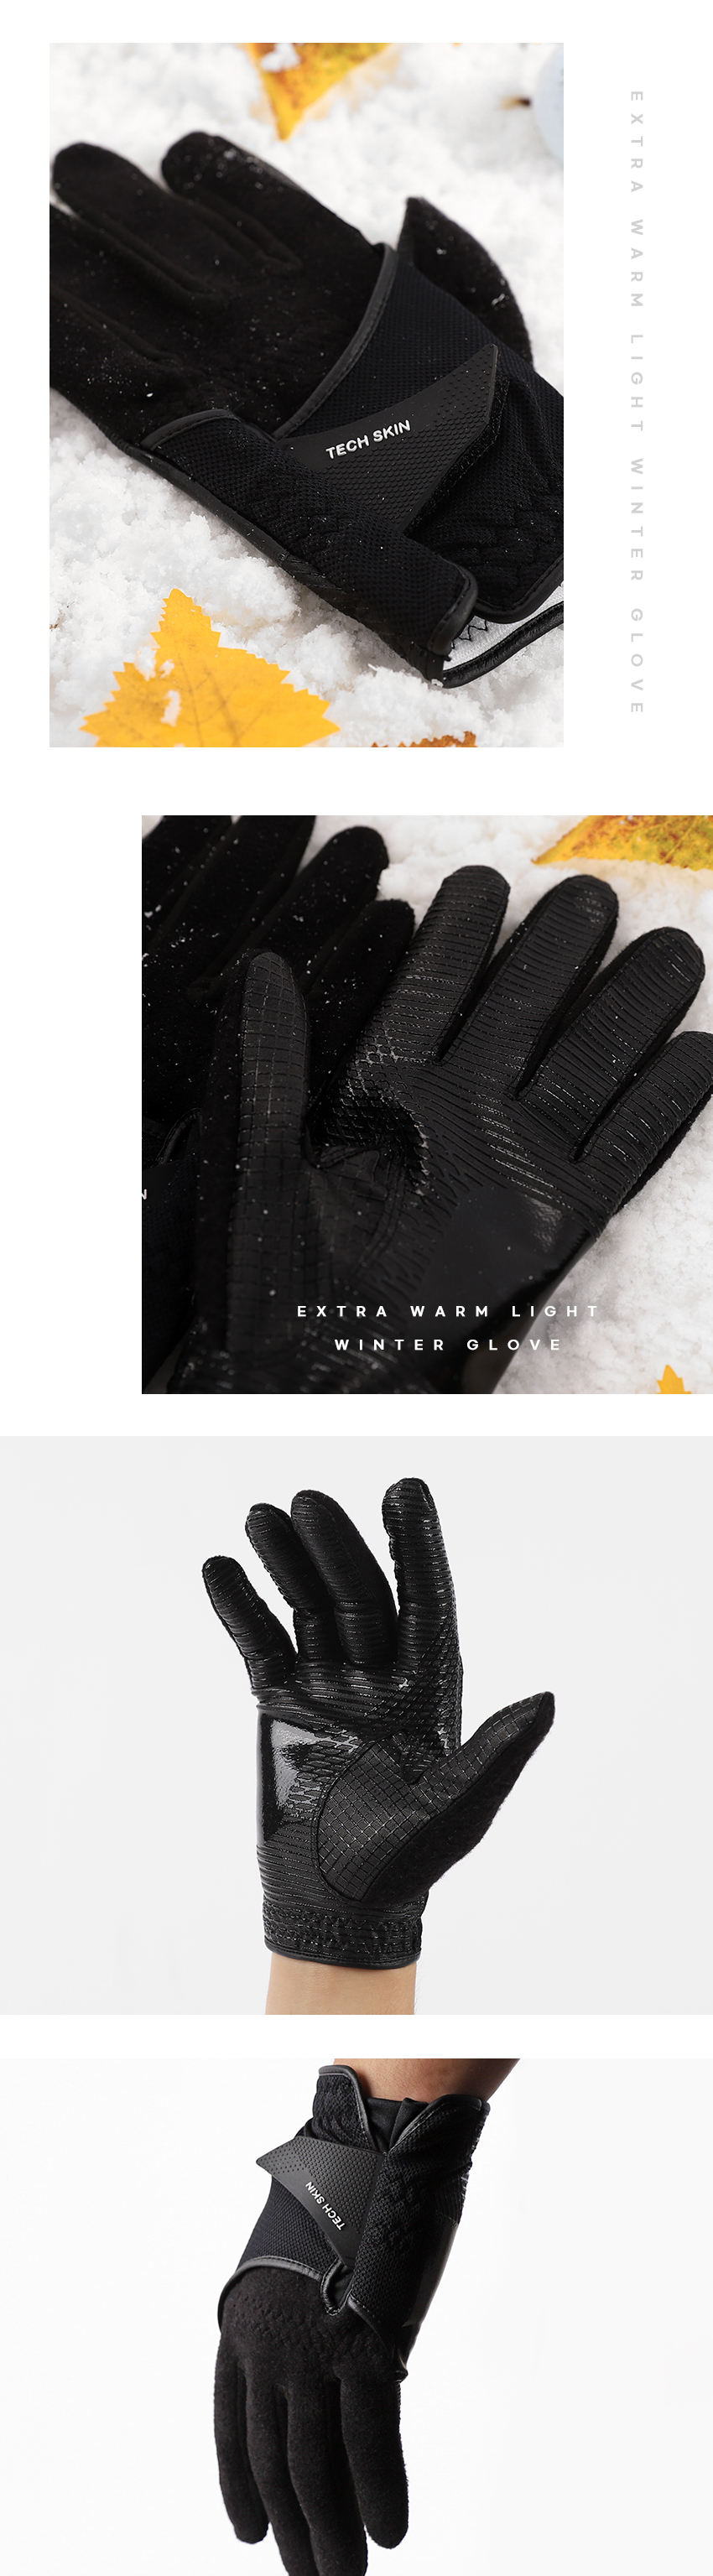 extra_winter_glove2_04.webp